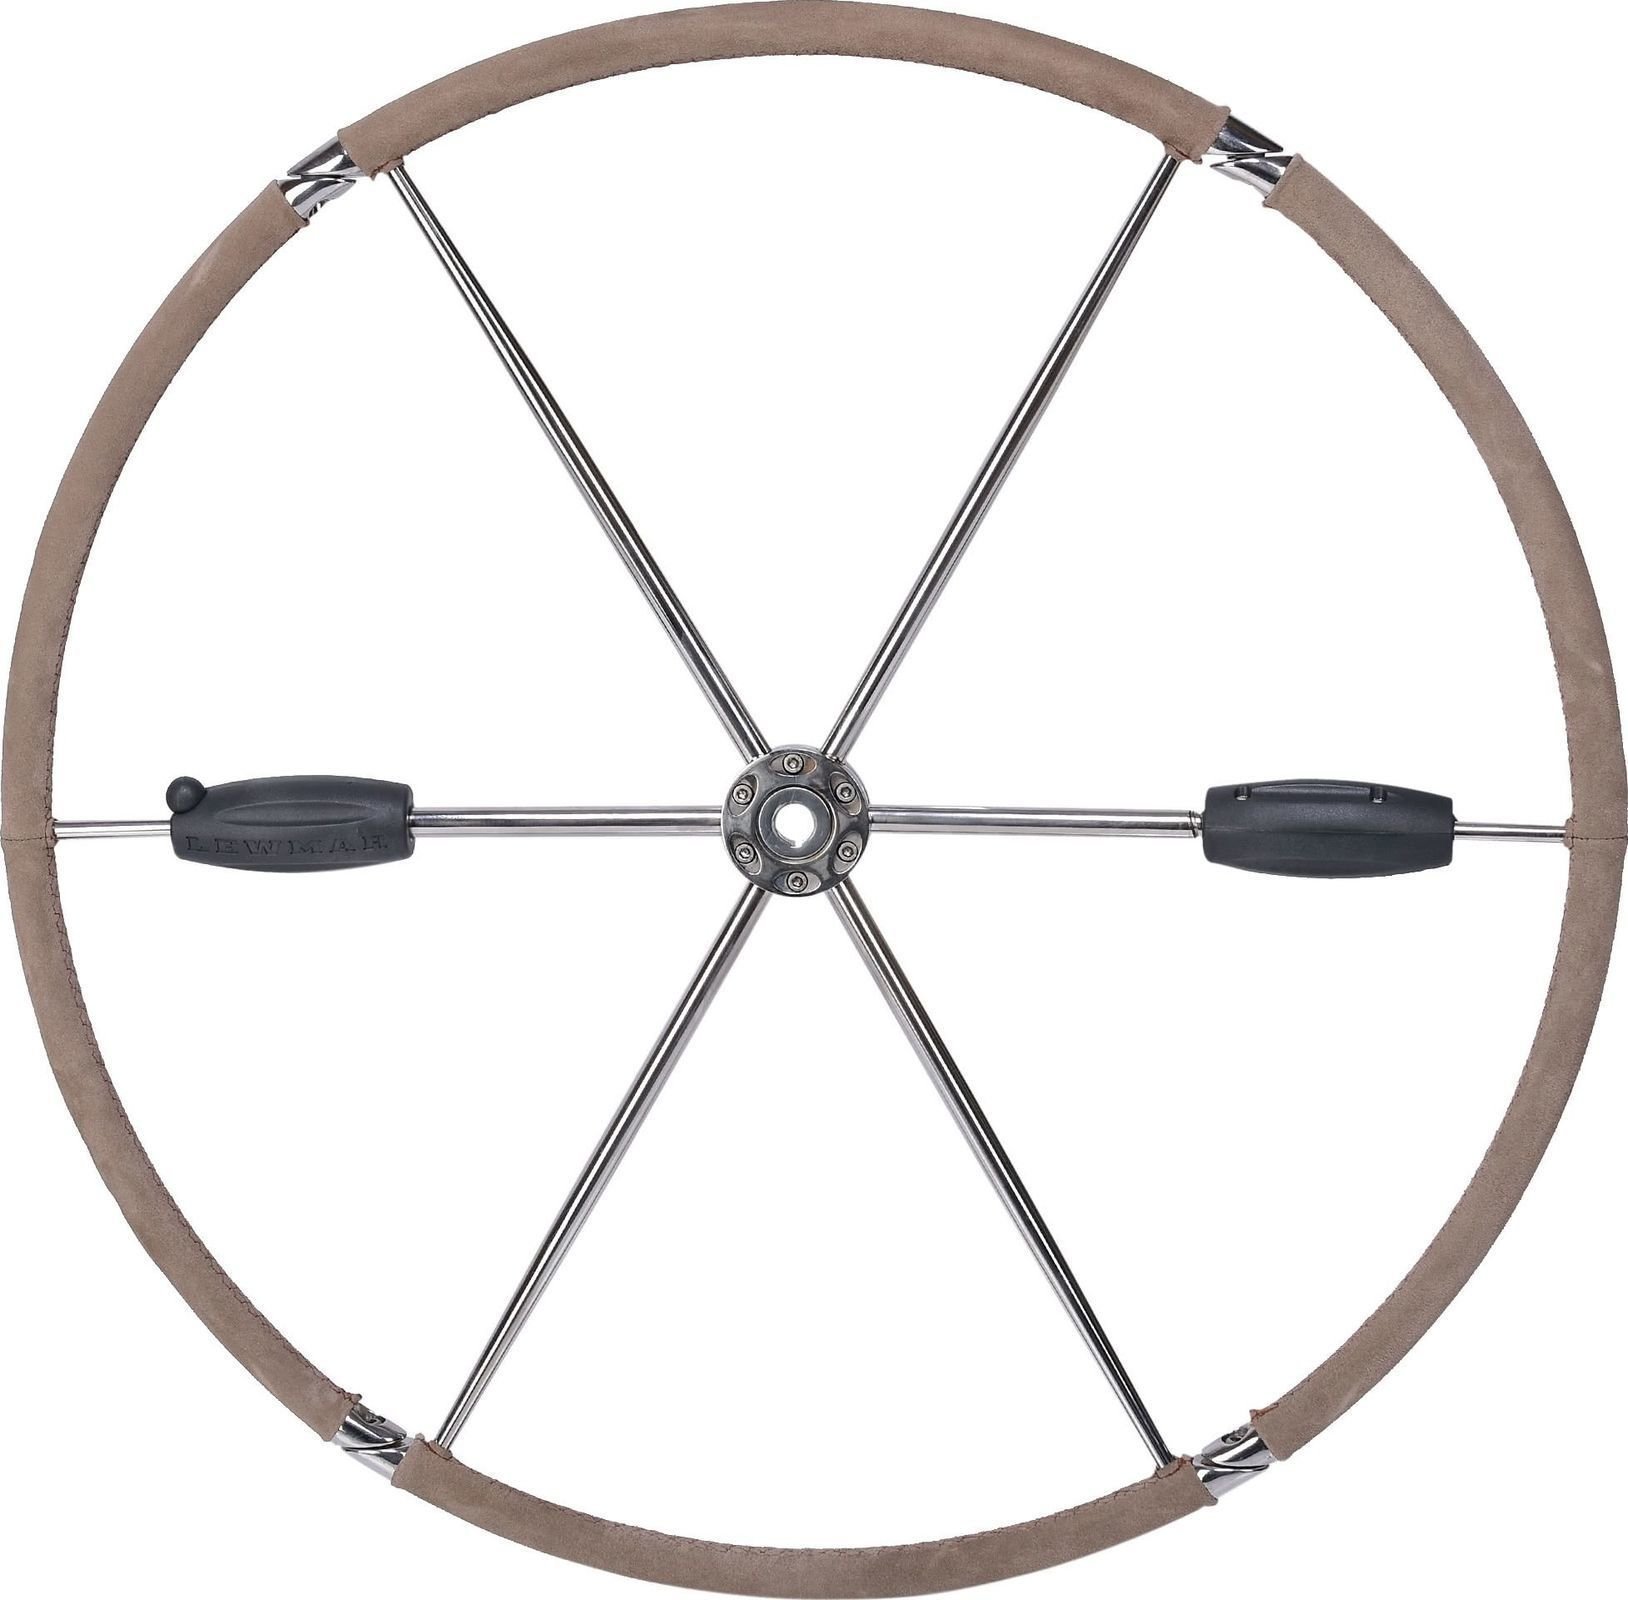 Roda do leme de barco Lewmar Folding Steering Wheel 40'' Roda do leme de barco